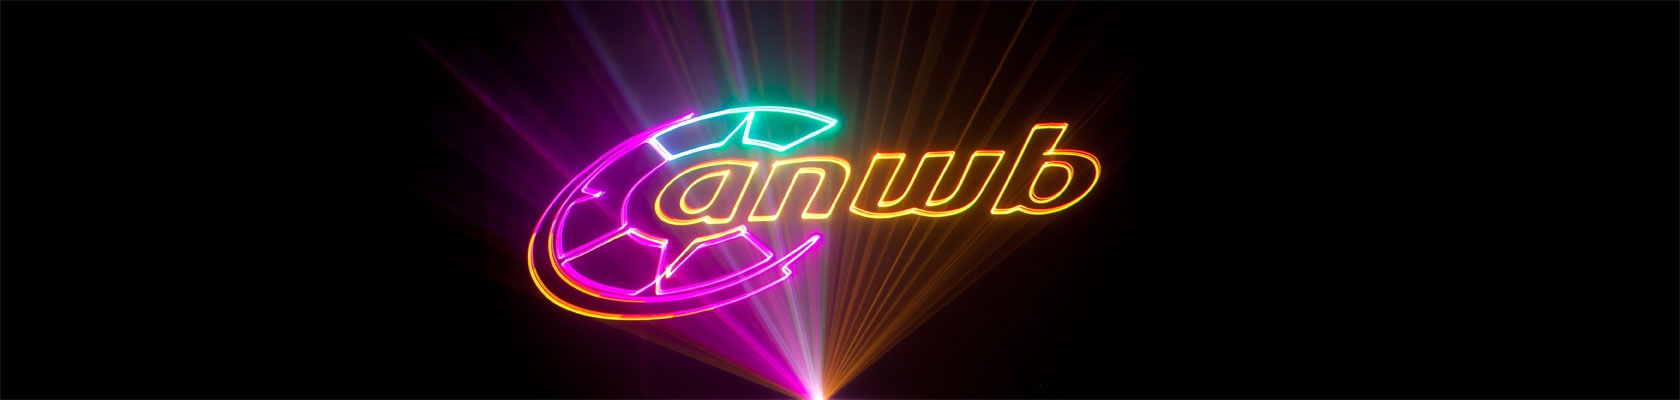 Anwb Logo In Neonlicht